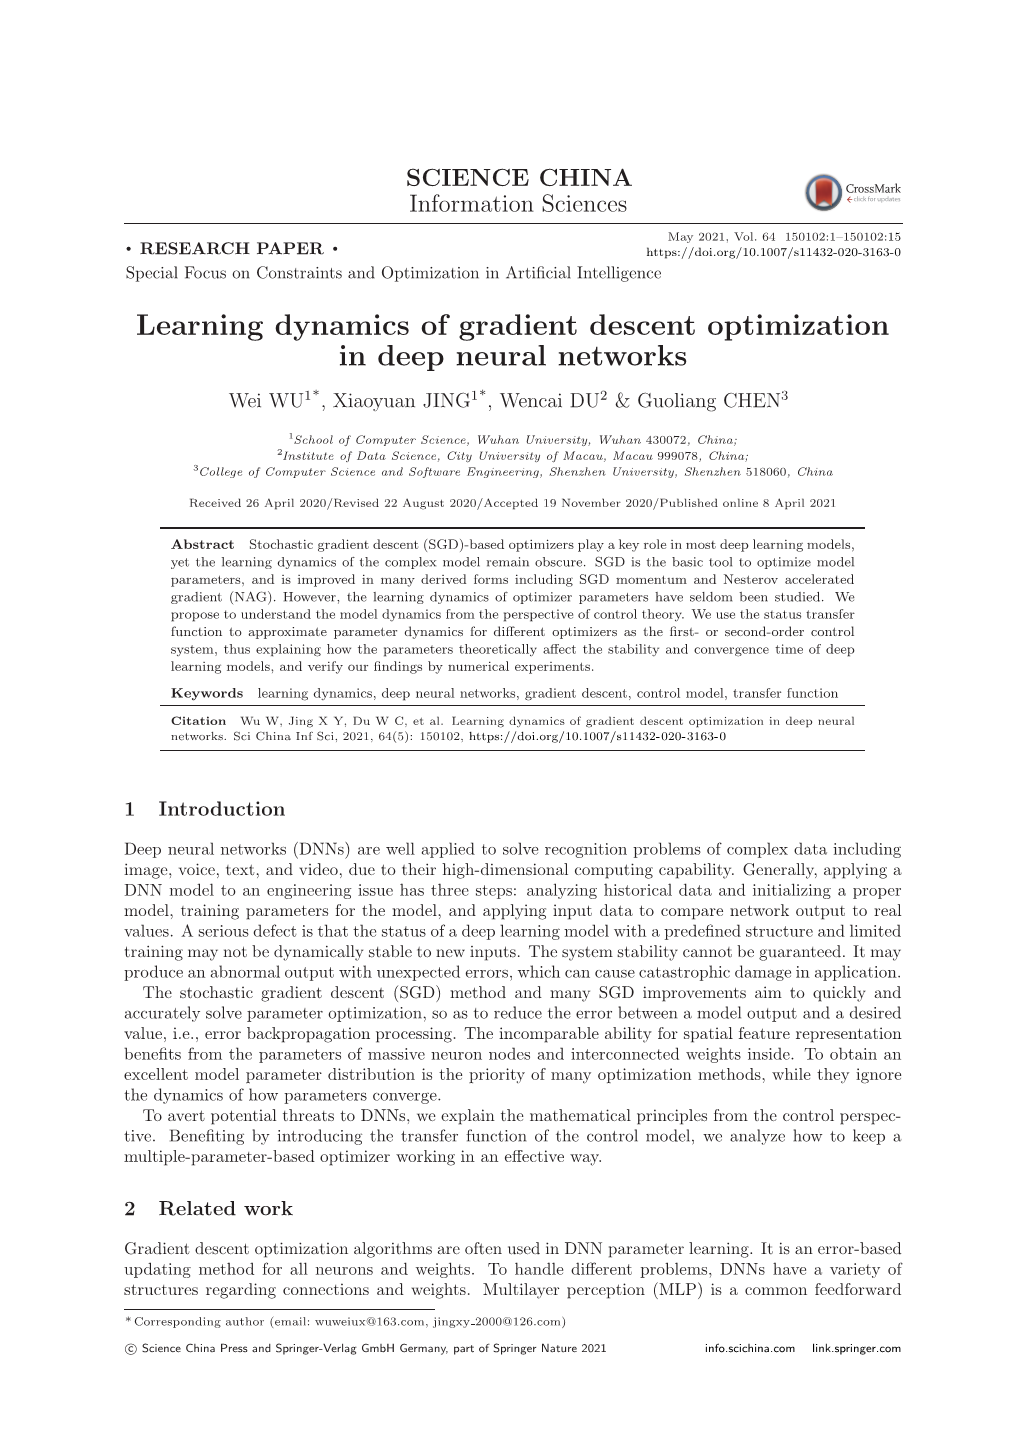 Learning Dynamics of Gradient Descent Optimization in Deep Neural Networks Wei WU1*, Xiaoyuan JING1*, Wencai DU2 & Guoliang CHEN3